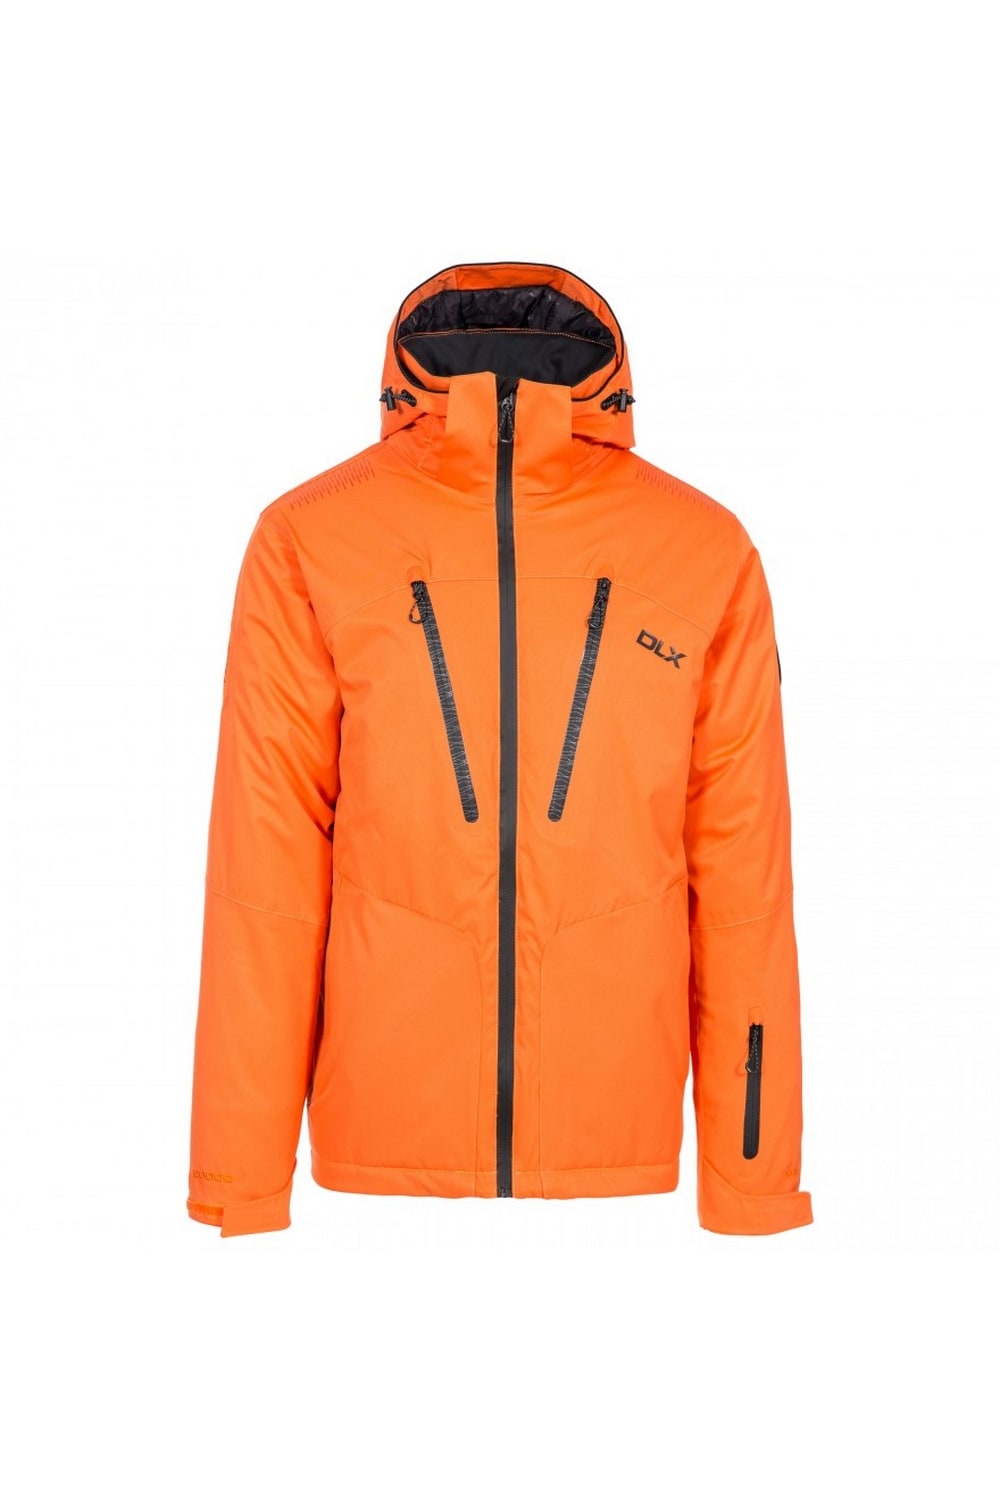 Trespass Mens DLX Banner Ski Jacket (Orange)